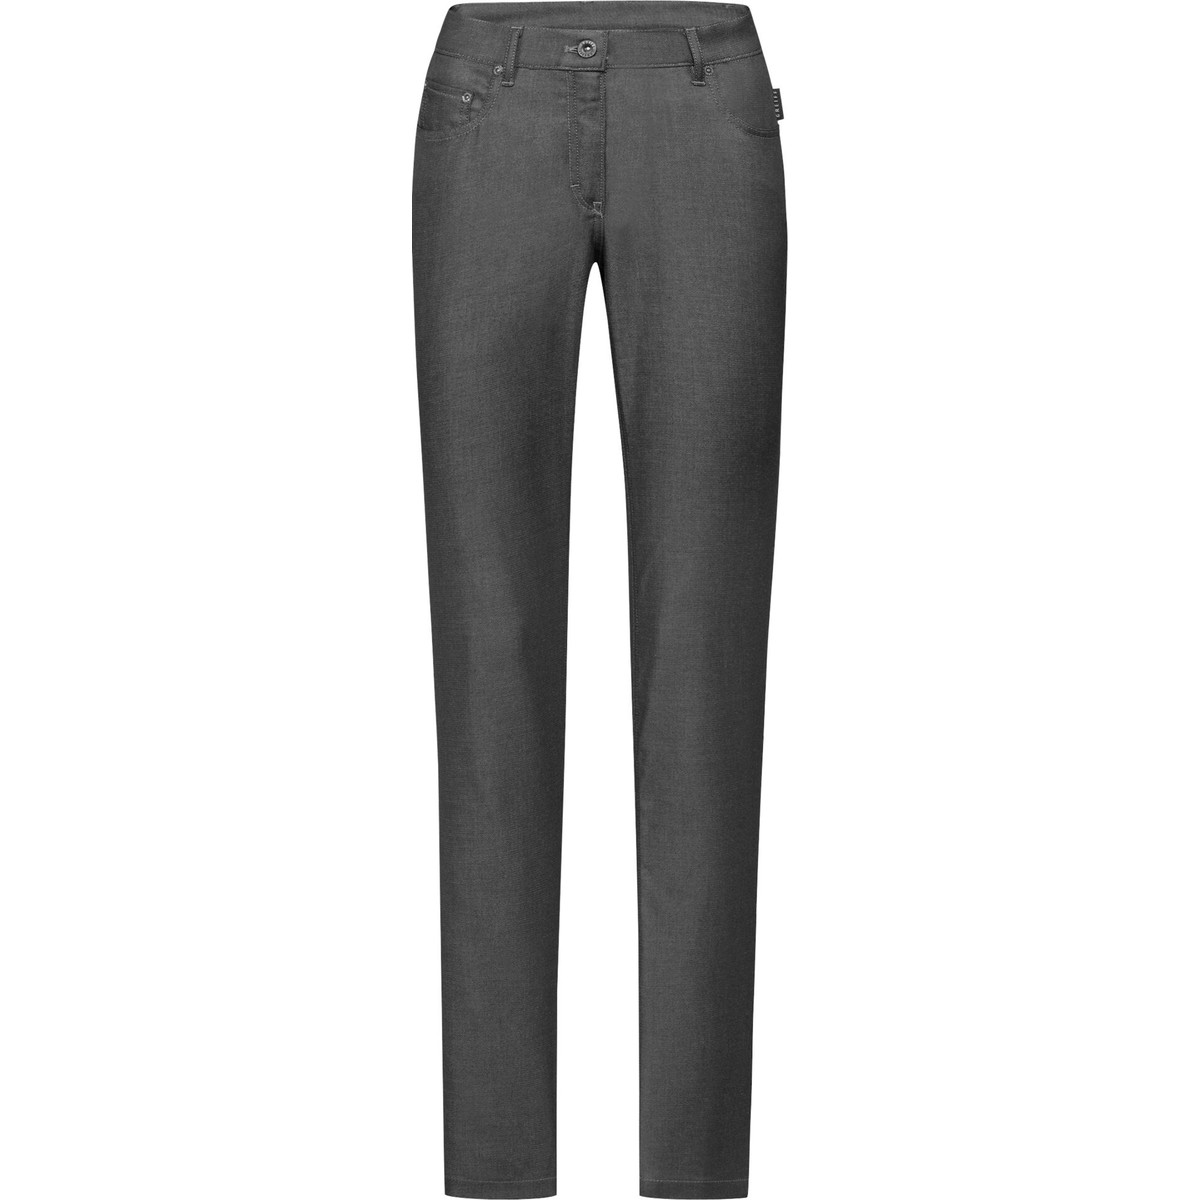 Damen-Kochhose Jeans-Style Größe 38